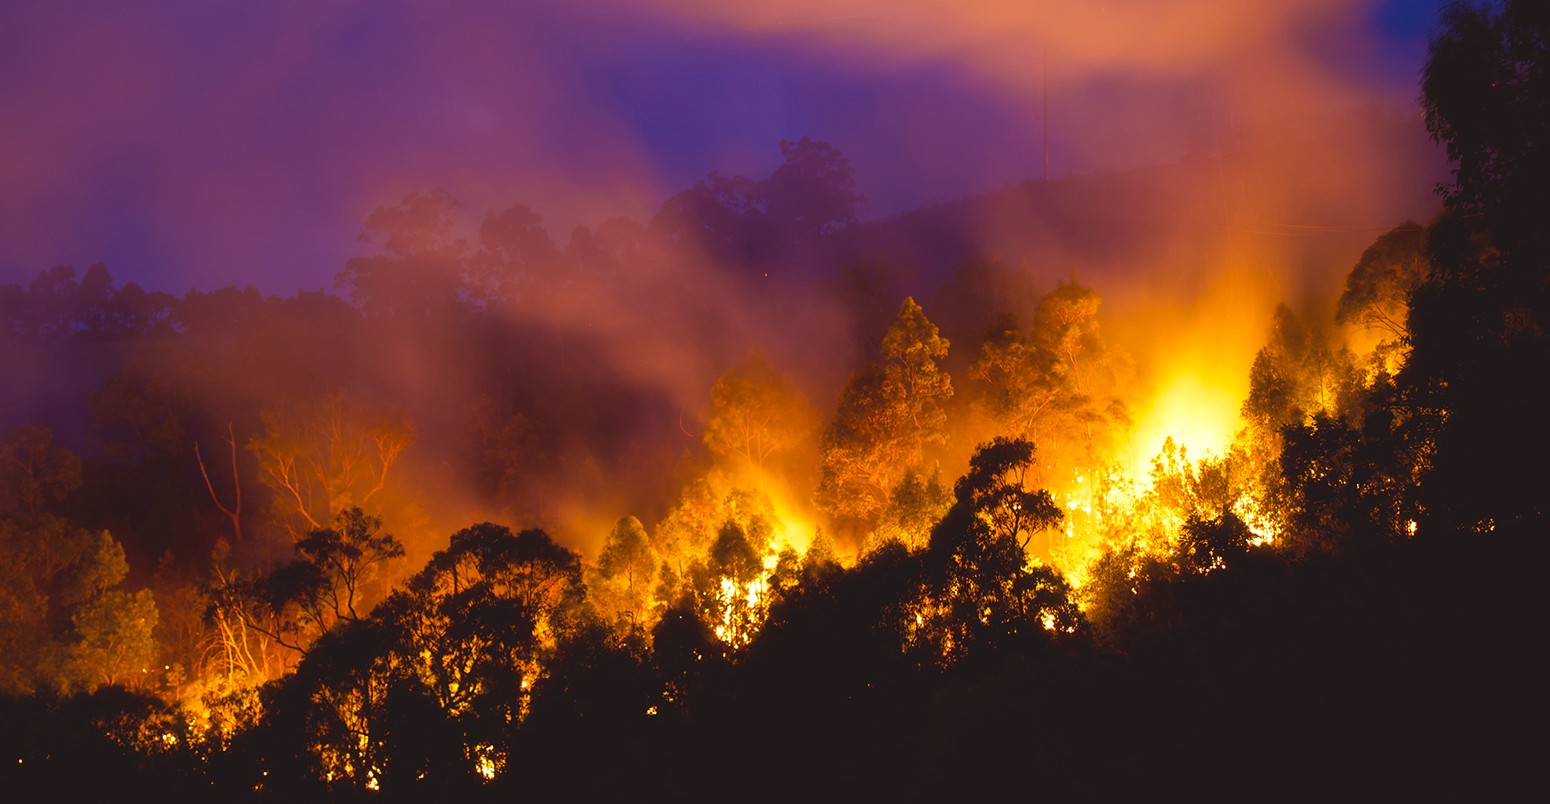 Bushfire near Newcastle, New South Wales, Australia